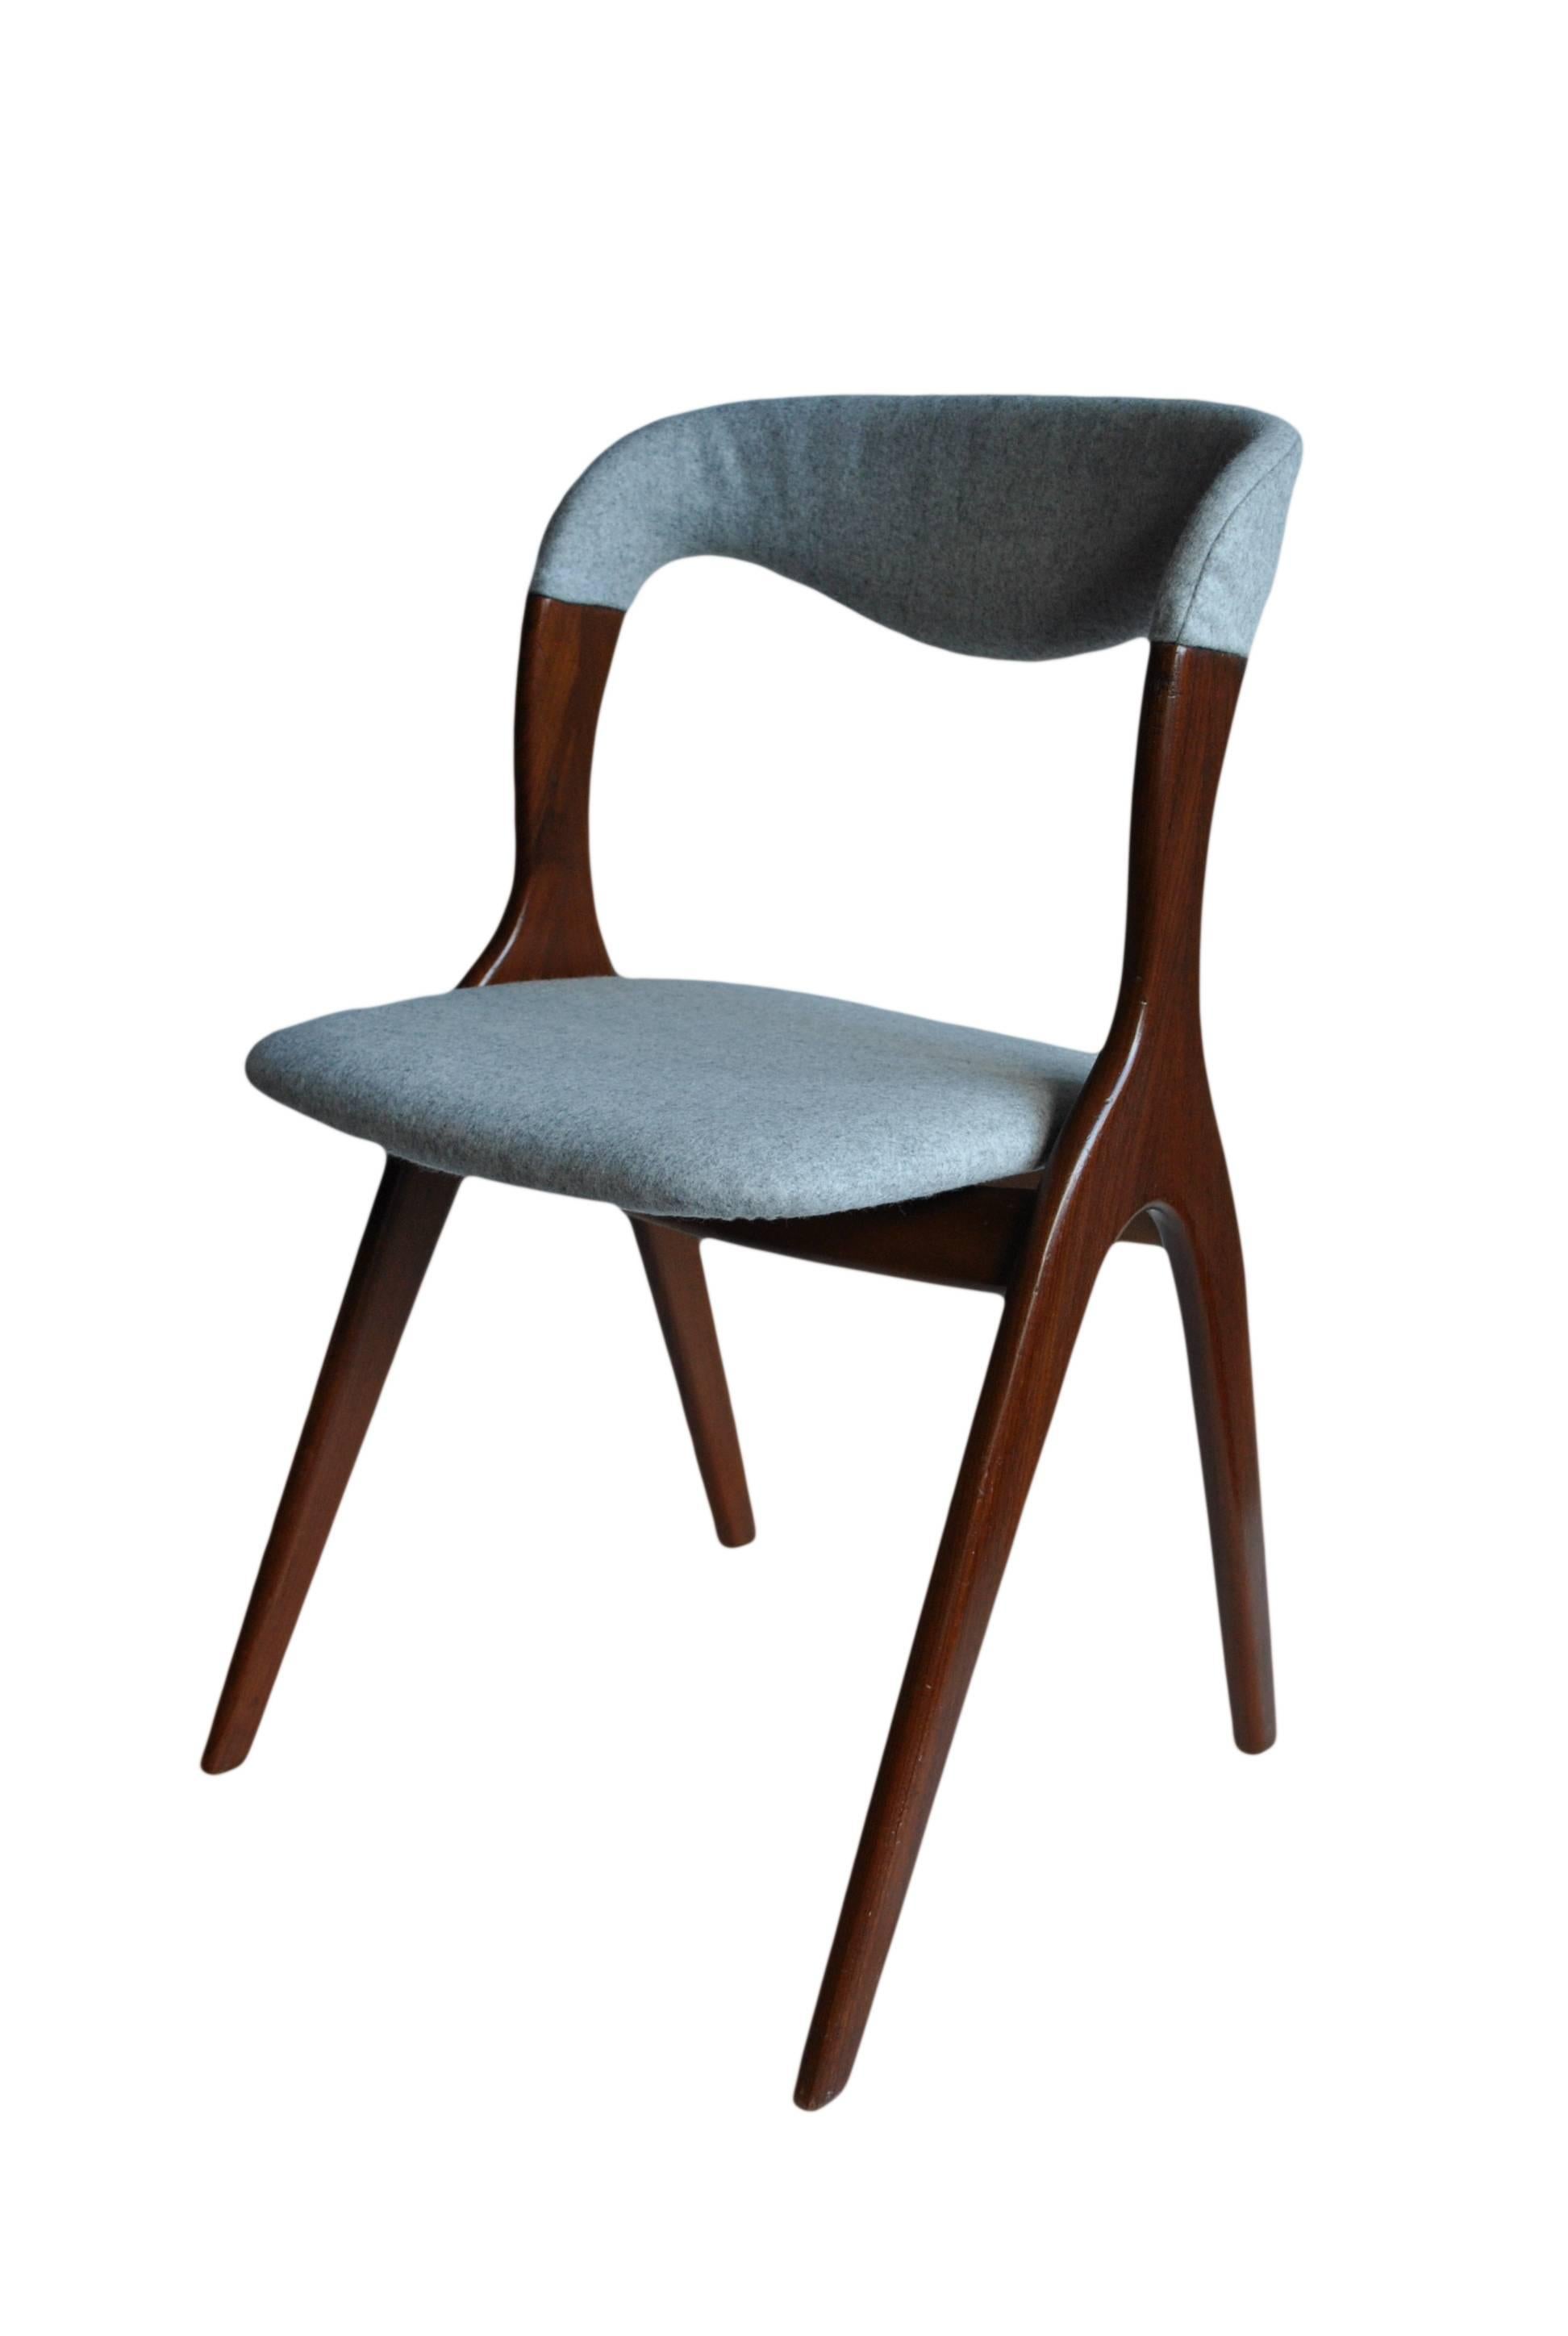 Danish Midcentury Dining Chairs, set of eight. Restored. 3